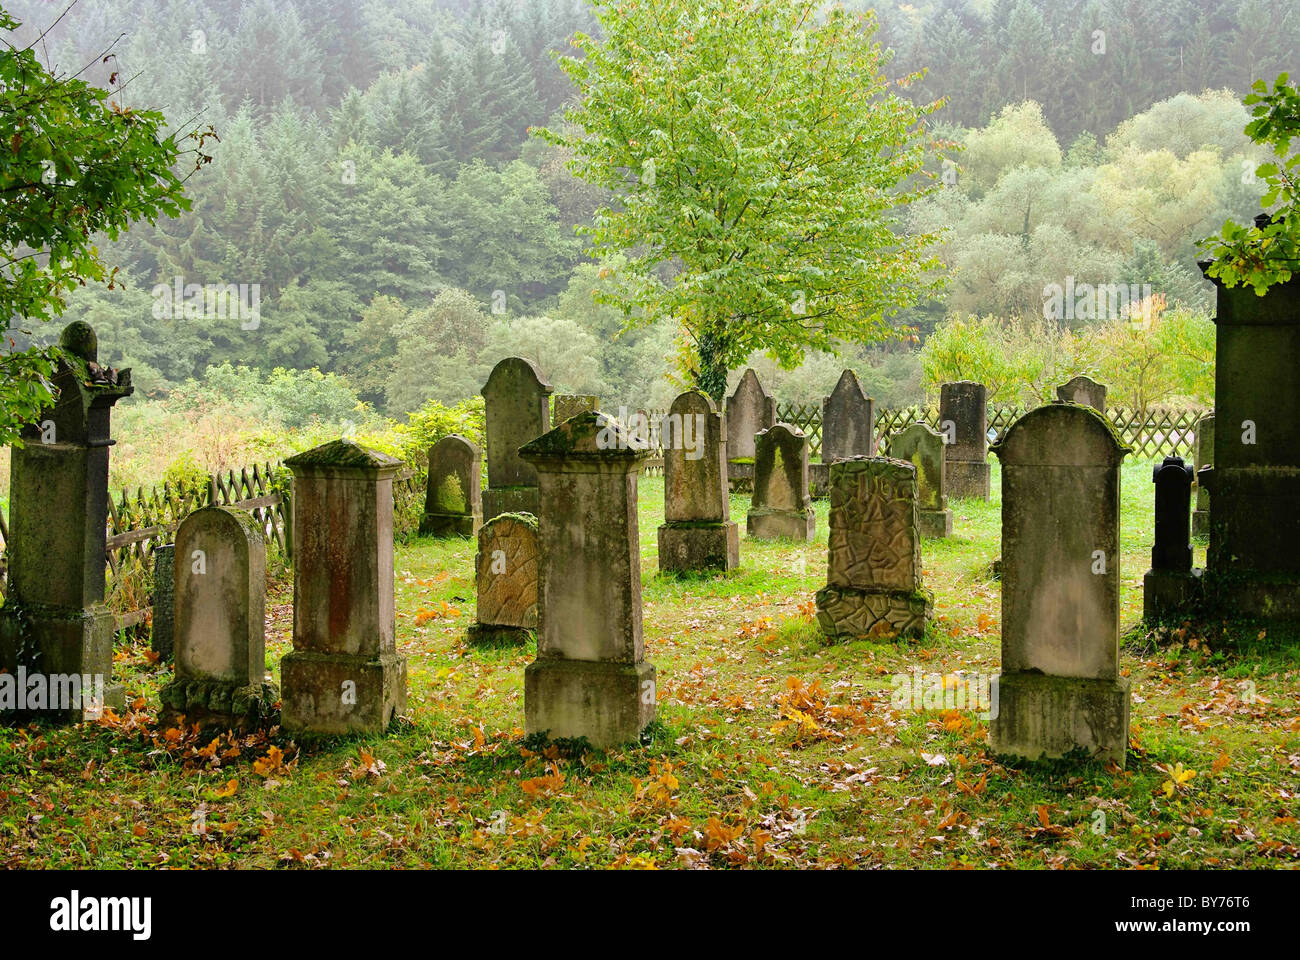 Juedischer Friedhof - jewish cemetary 12 Stock Photo